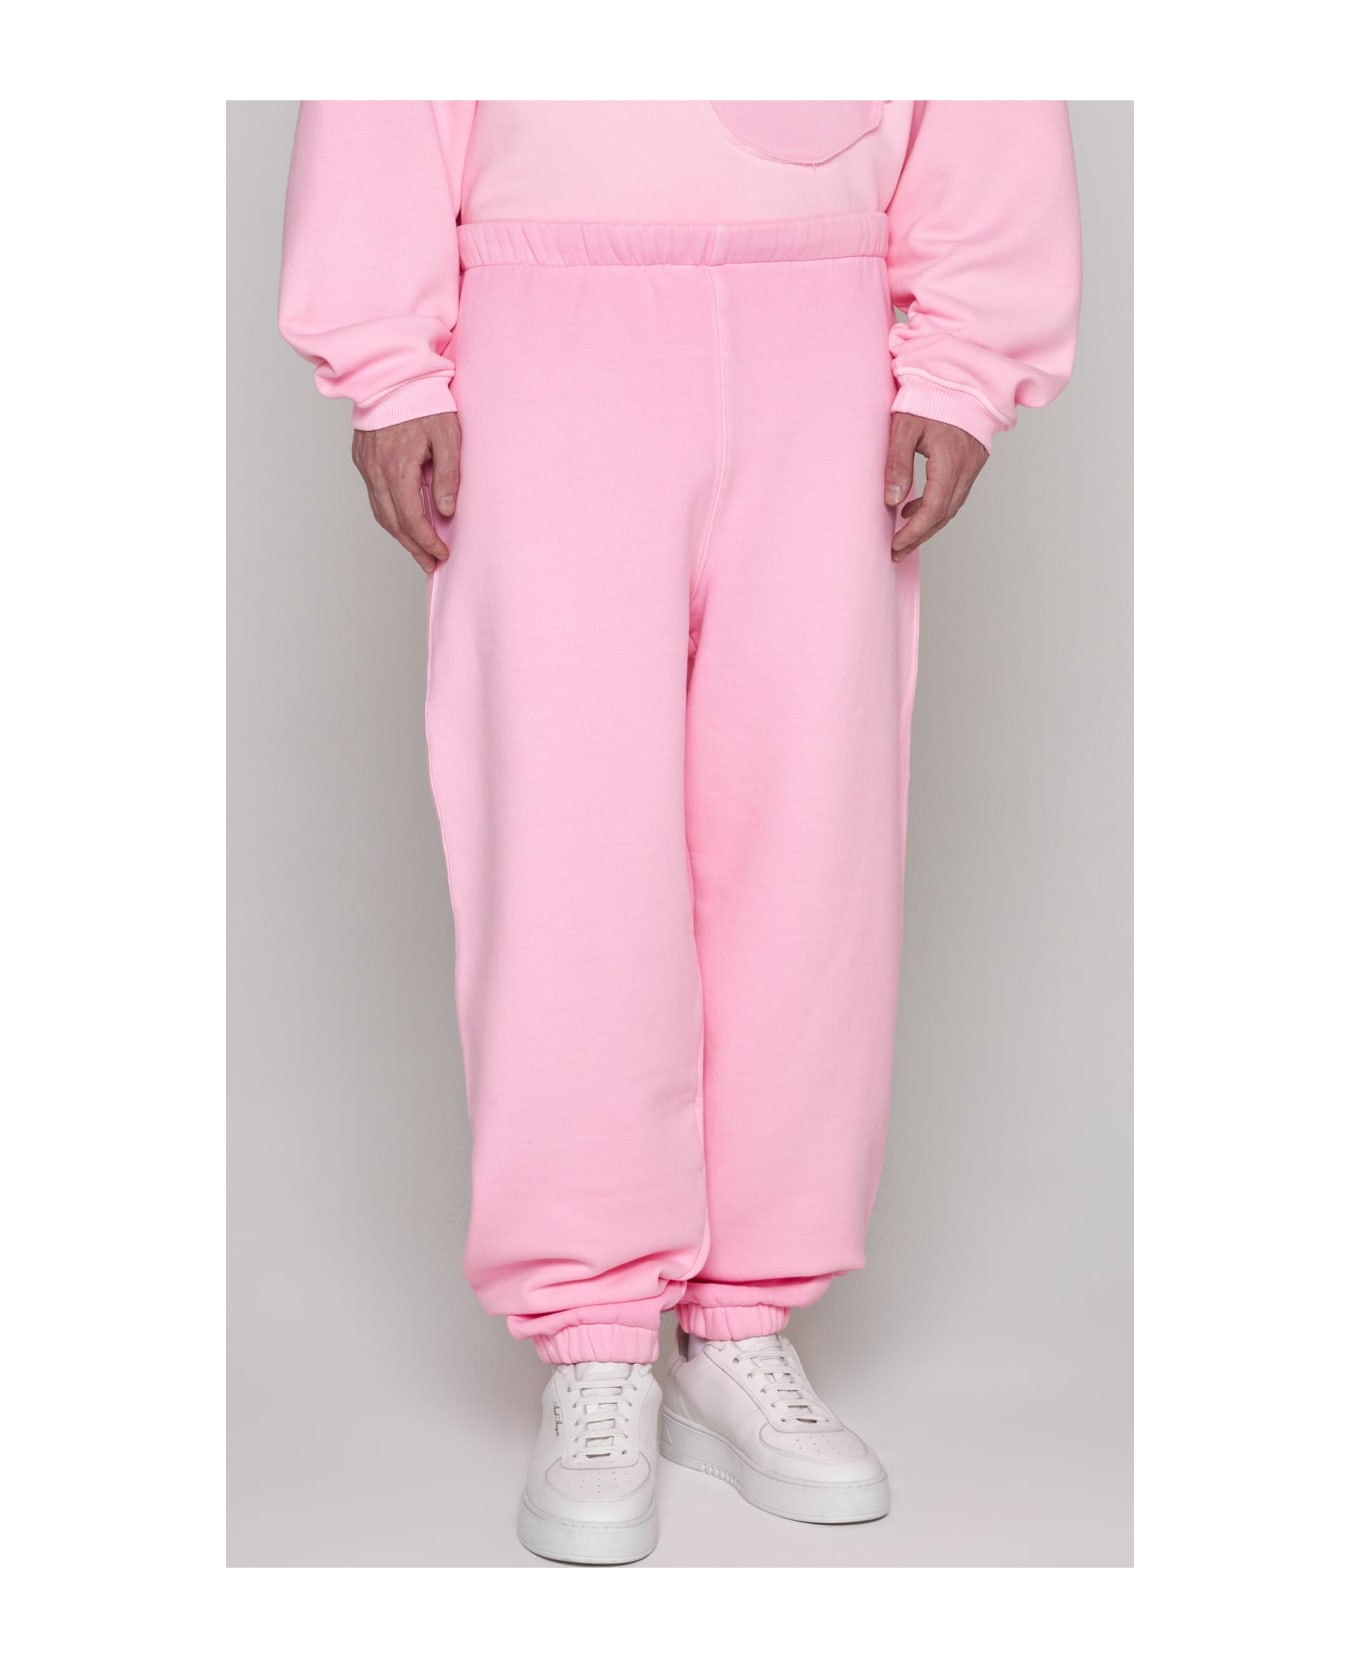 ERL Cotton Sweatpants - Pink